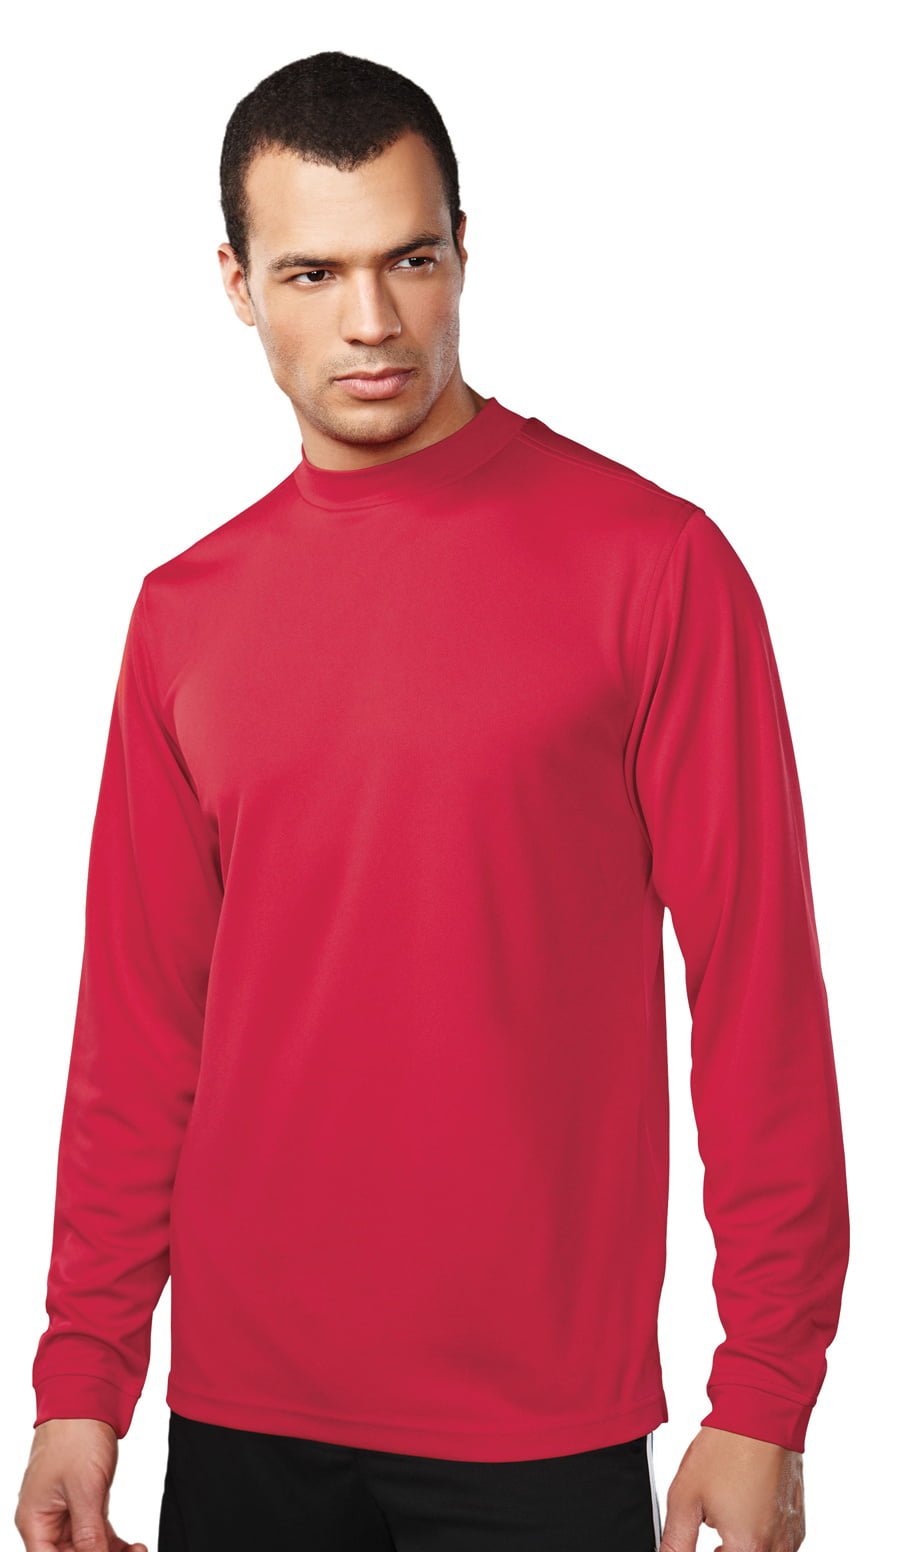 Heron 626 Knit Mock Neck Shirt, Small, Red - Walmart.com